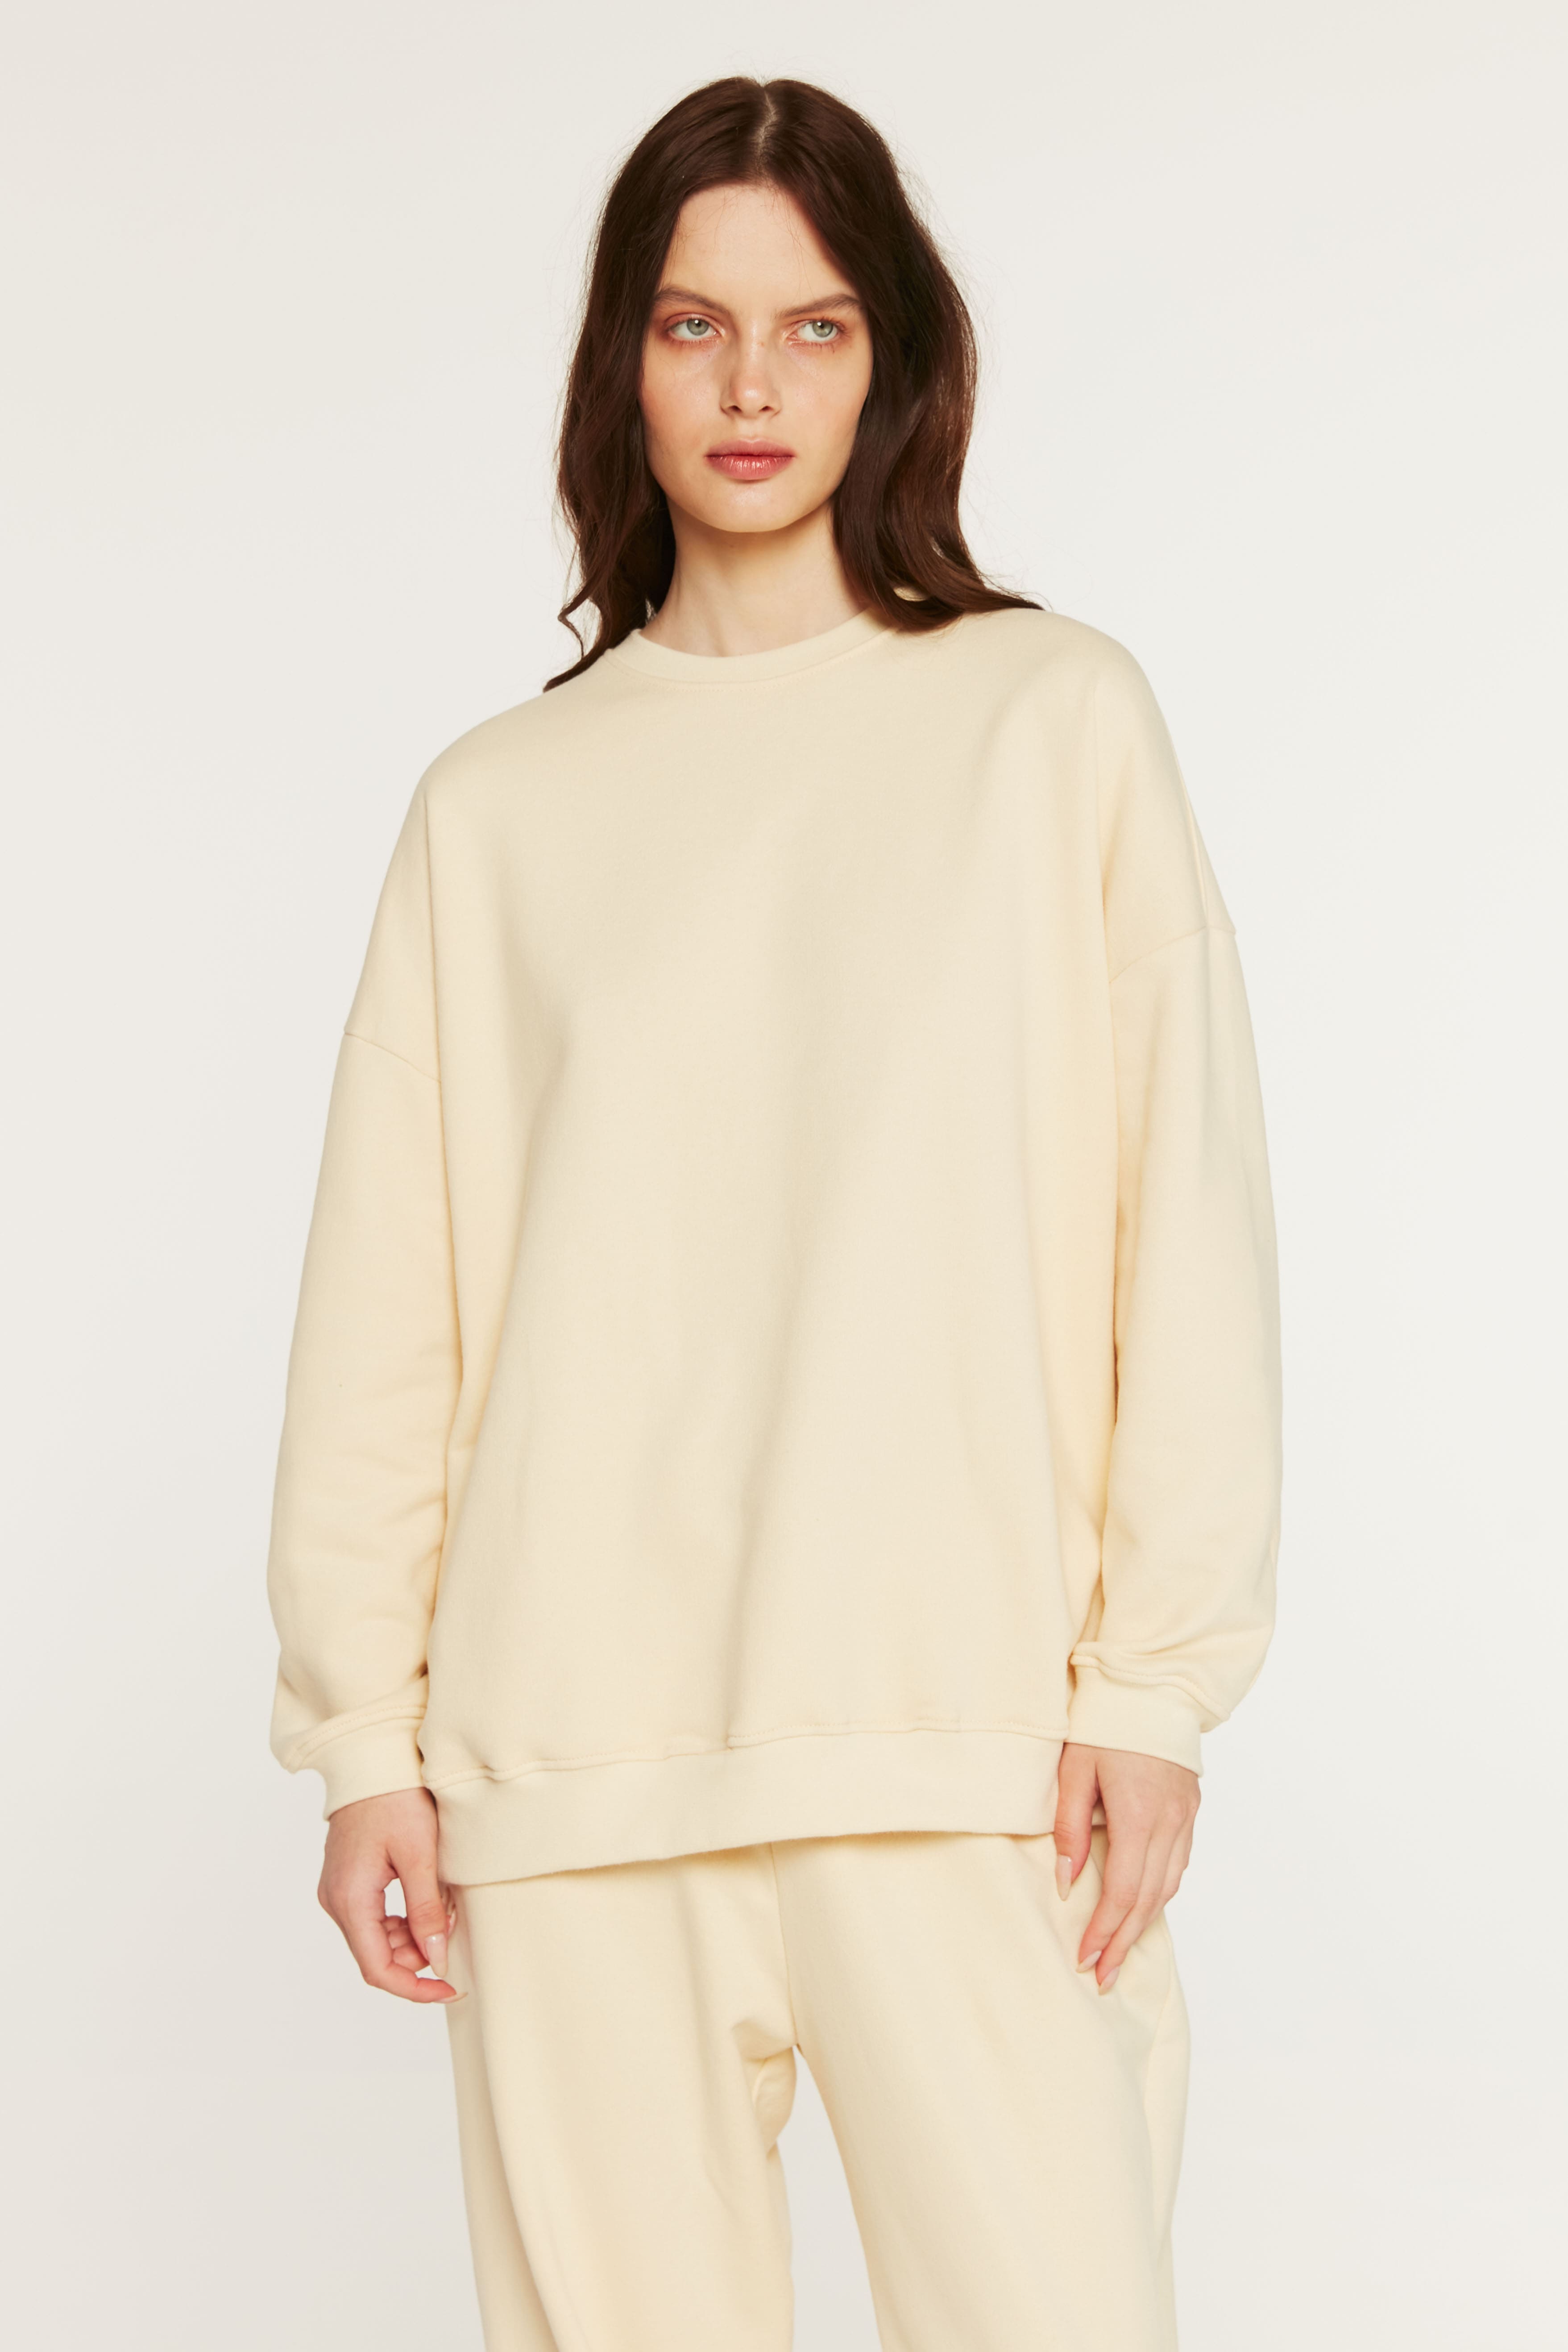 basic sweatshirt in vanilla color